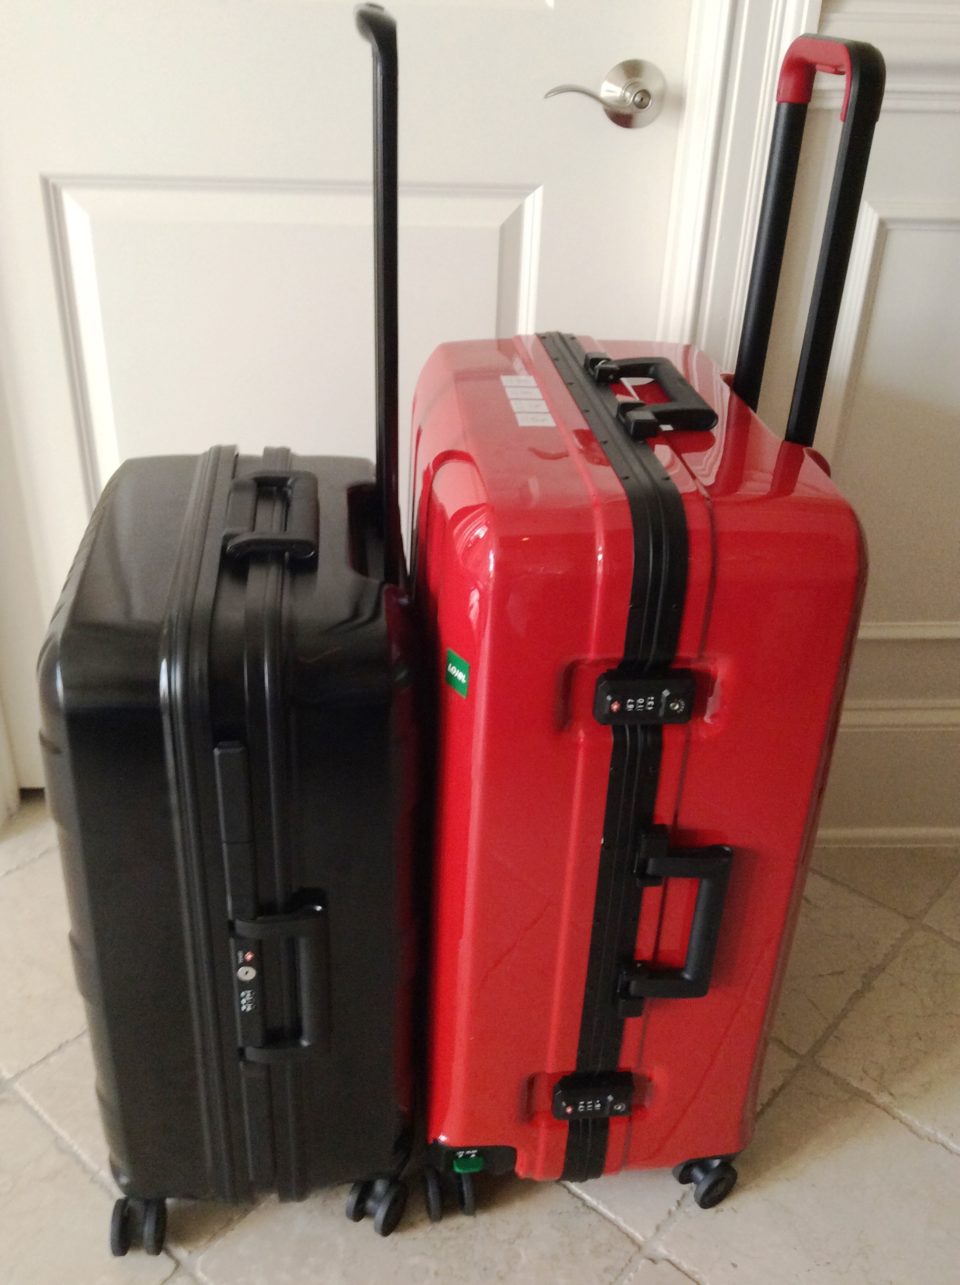 Lojel Luggage ~ The red Novigo and the black Kozmos suitcases